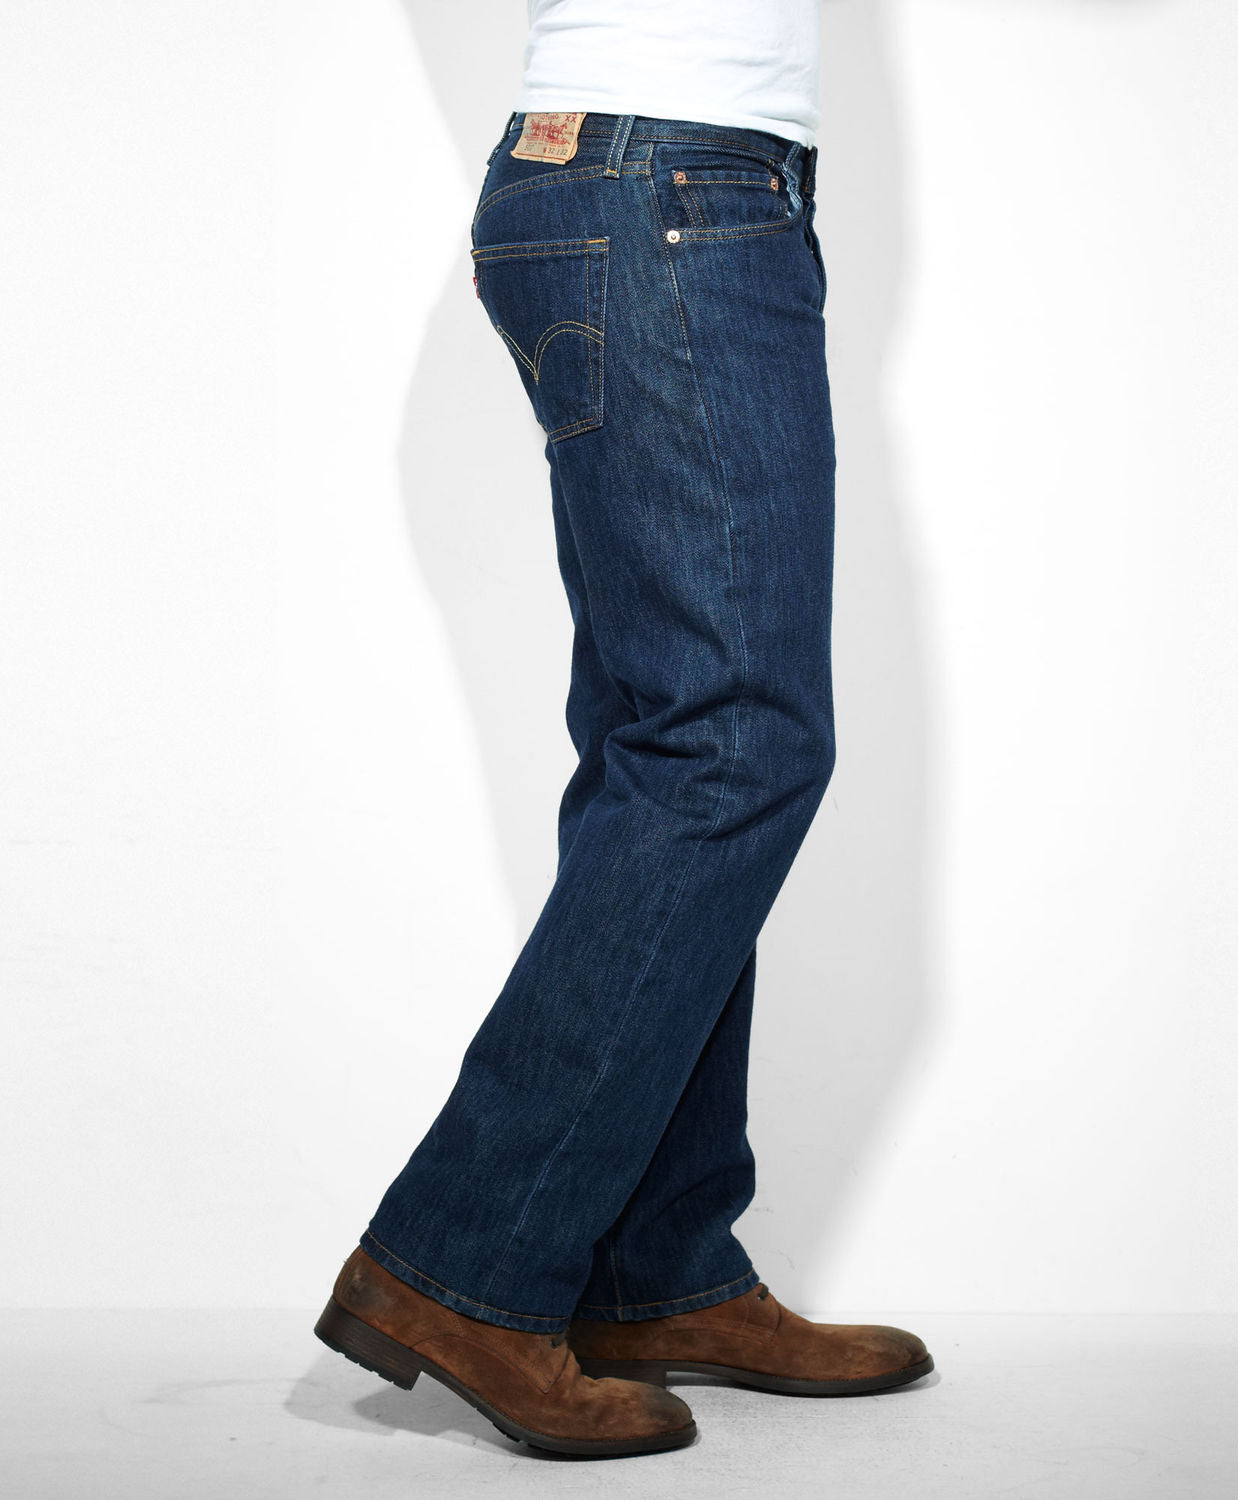 Levi's Men's 501 Original Prewashed Regular Straight Leg Jeans